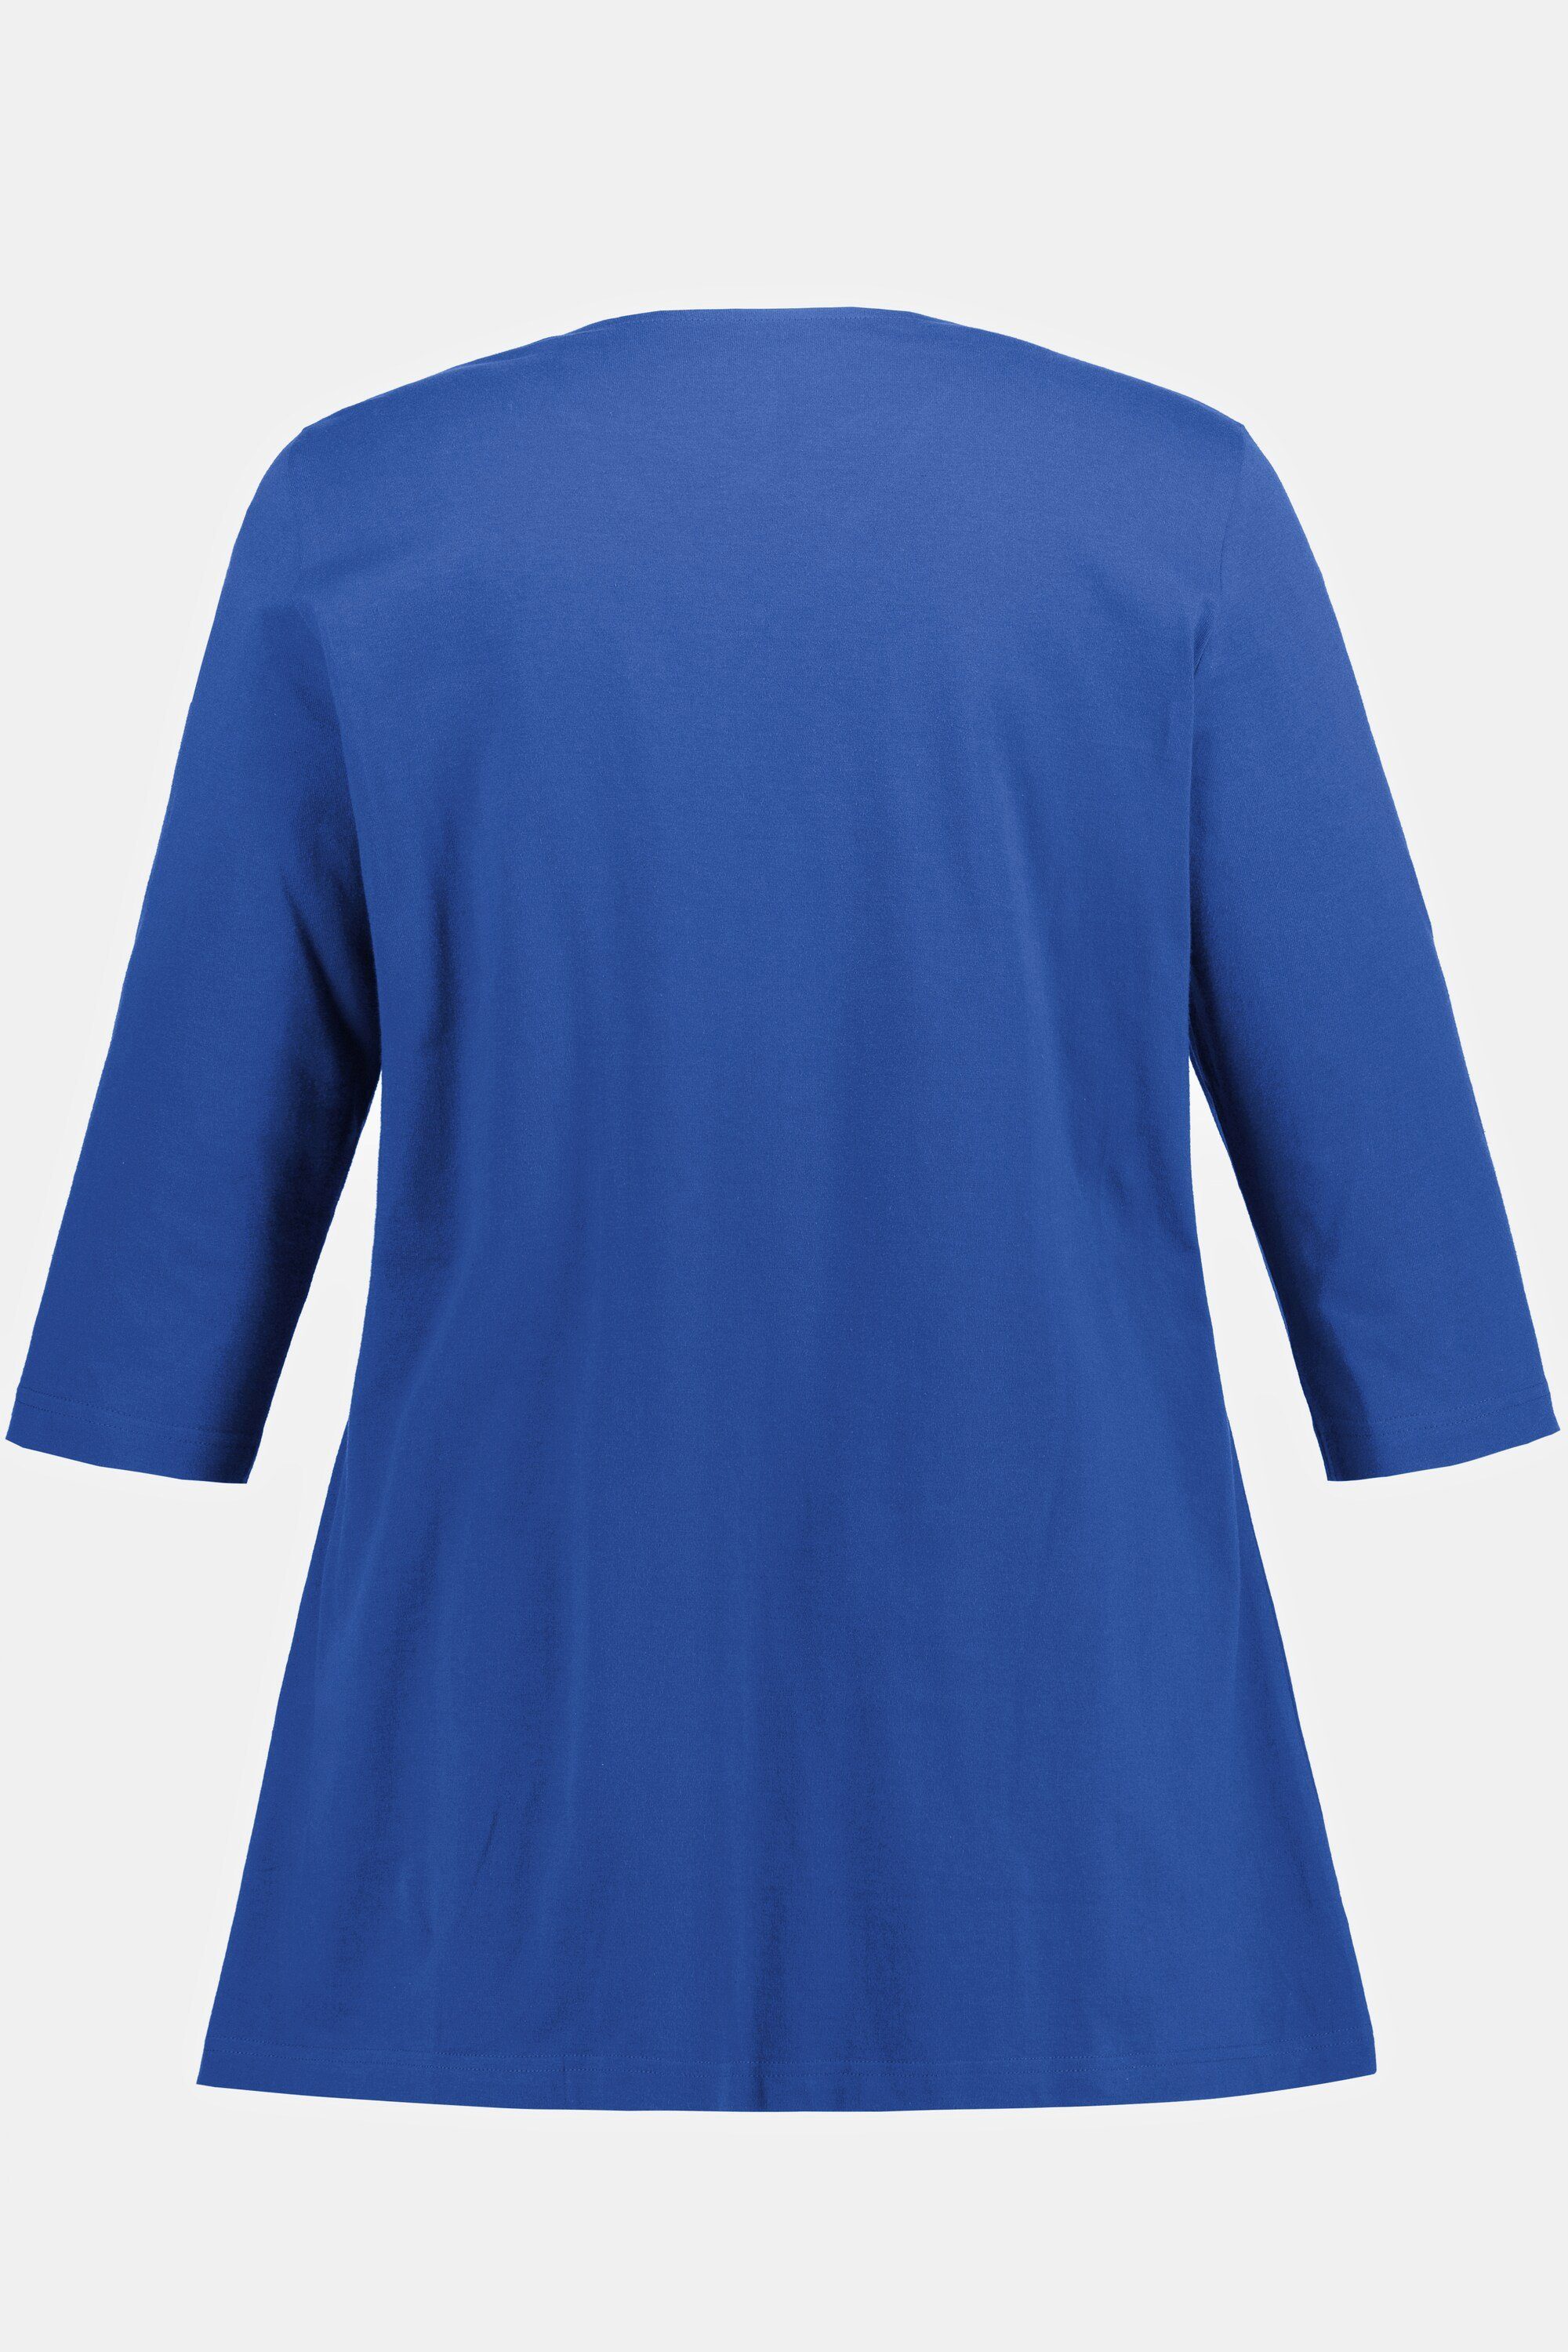 Popken Ulla 3/4-Arm A-Linie Longshirt Longshirt tintenblau Rundhals